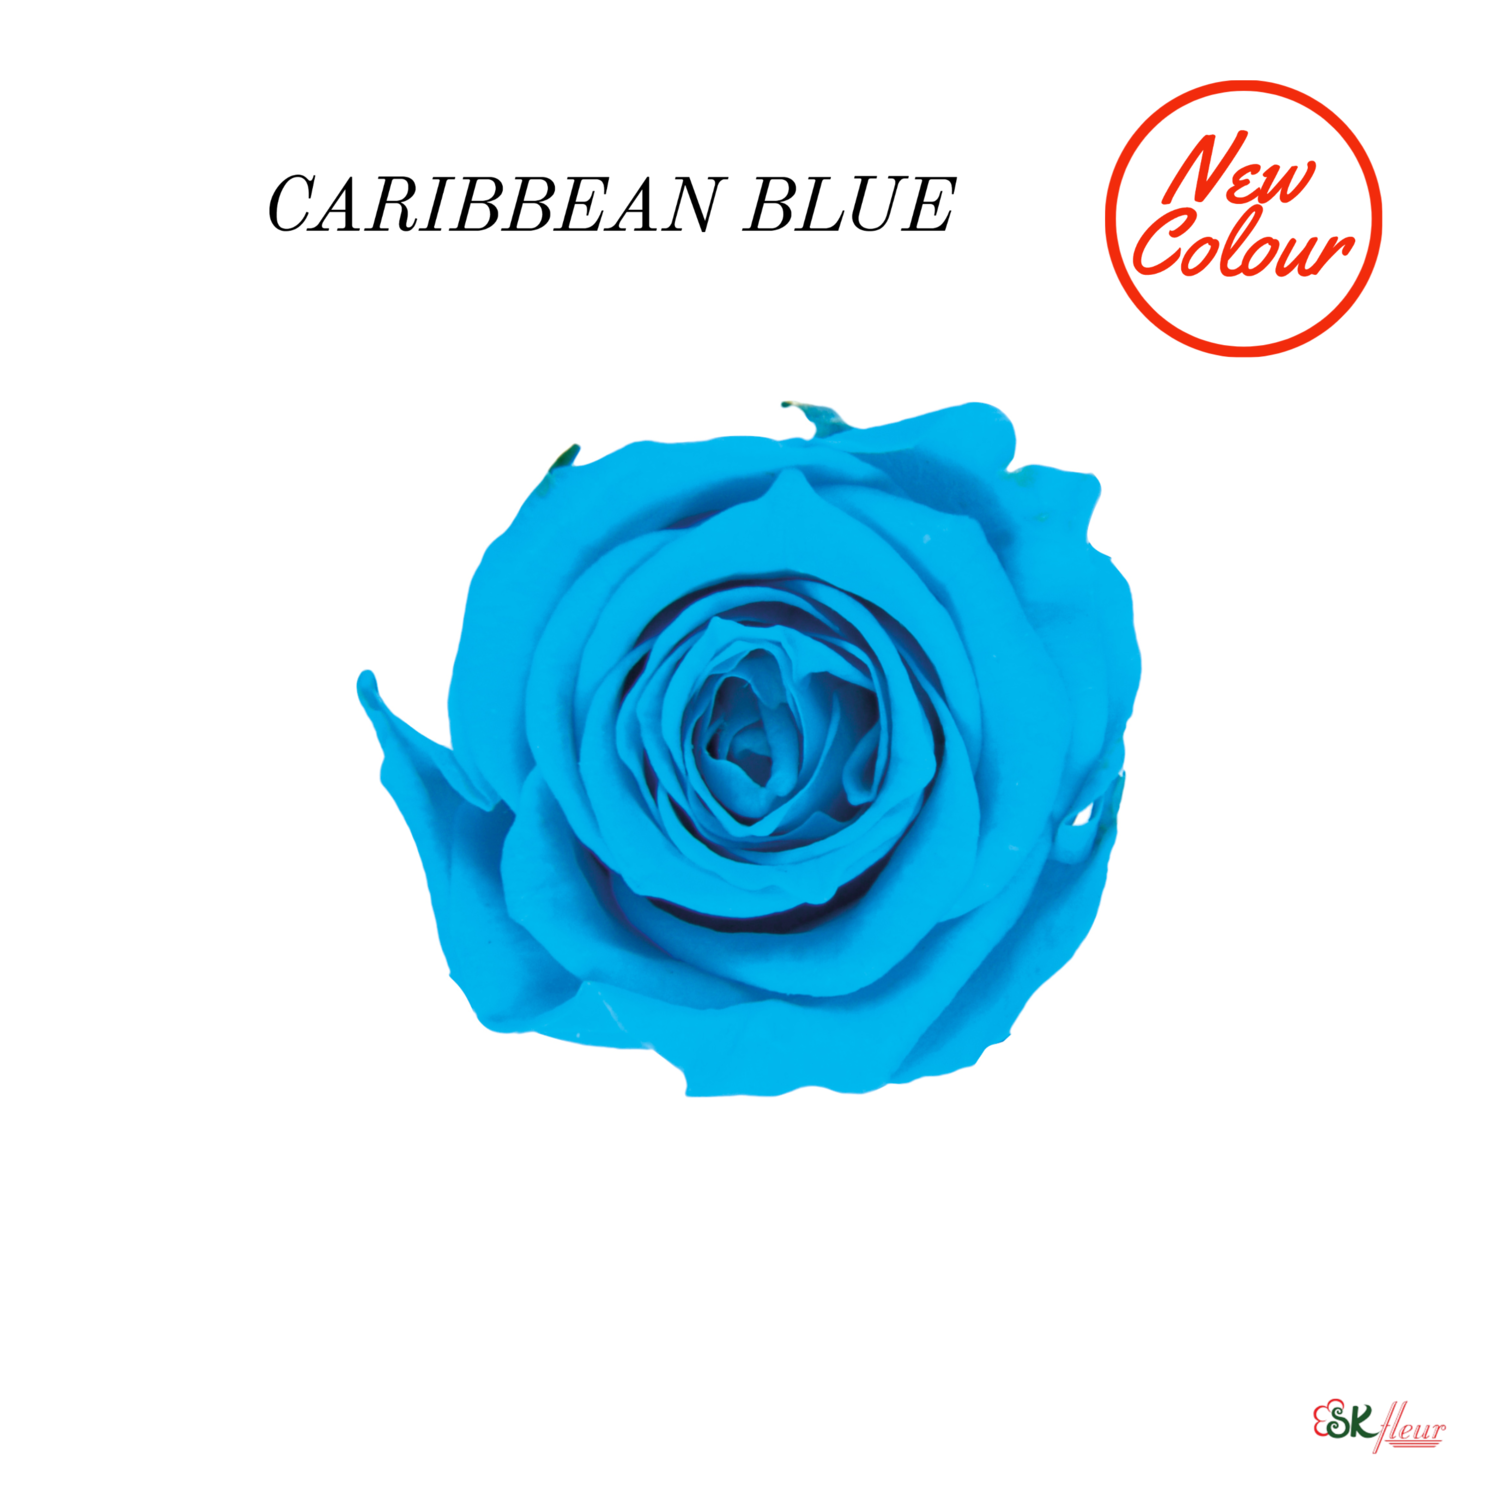 Piccola Blossom Rose / Caribbean Blue